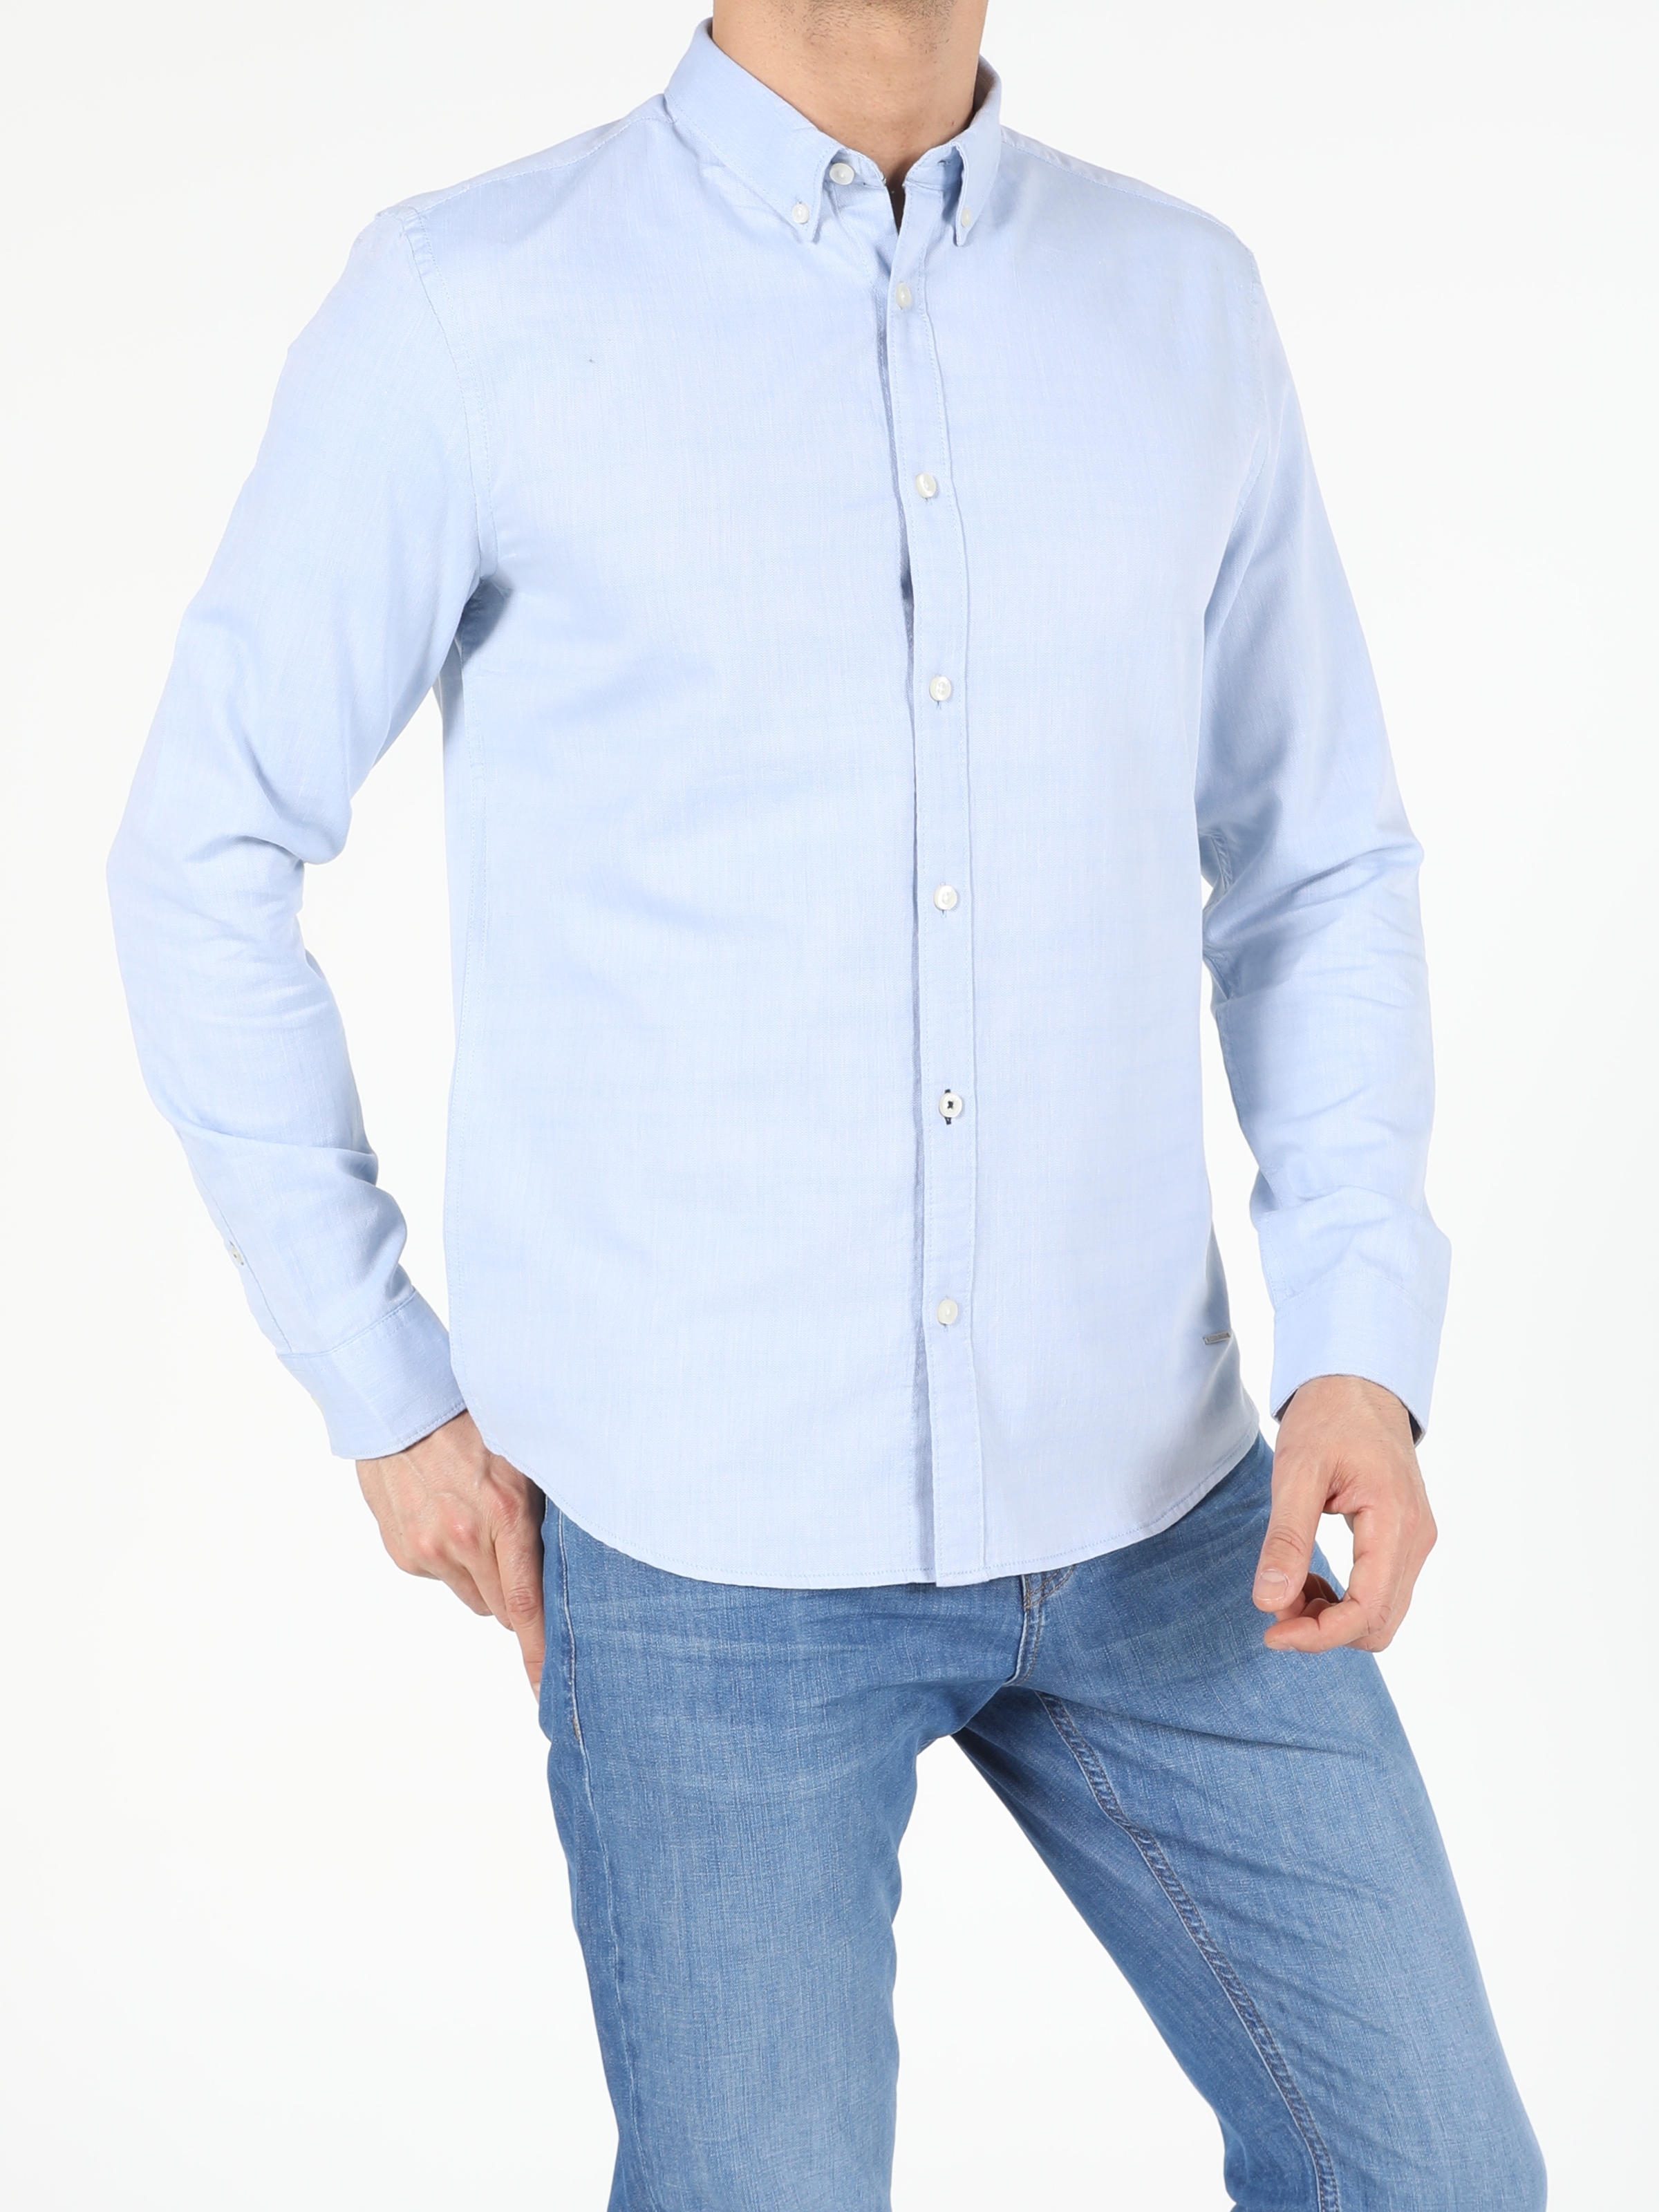 Colins Açık Mavi Slim Fit Shirt Neck Erkek Uzun Kol Gömlek. 1